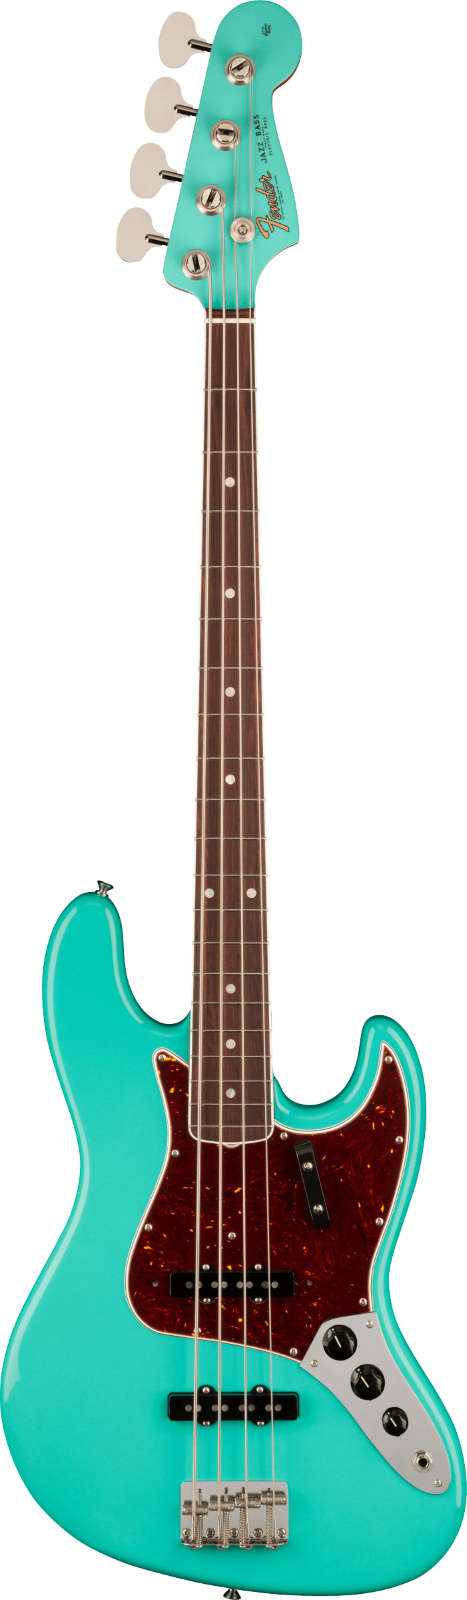 Fender American Vintage II 1966 Jazz Bass, Rosewood Fingerboard, Sea Foam Green : photo 1